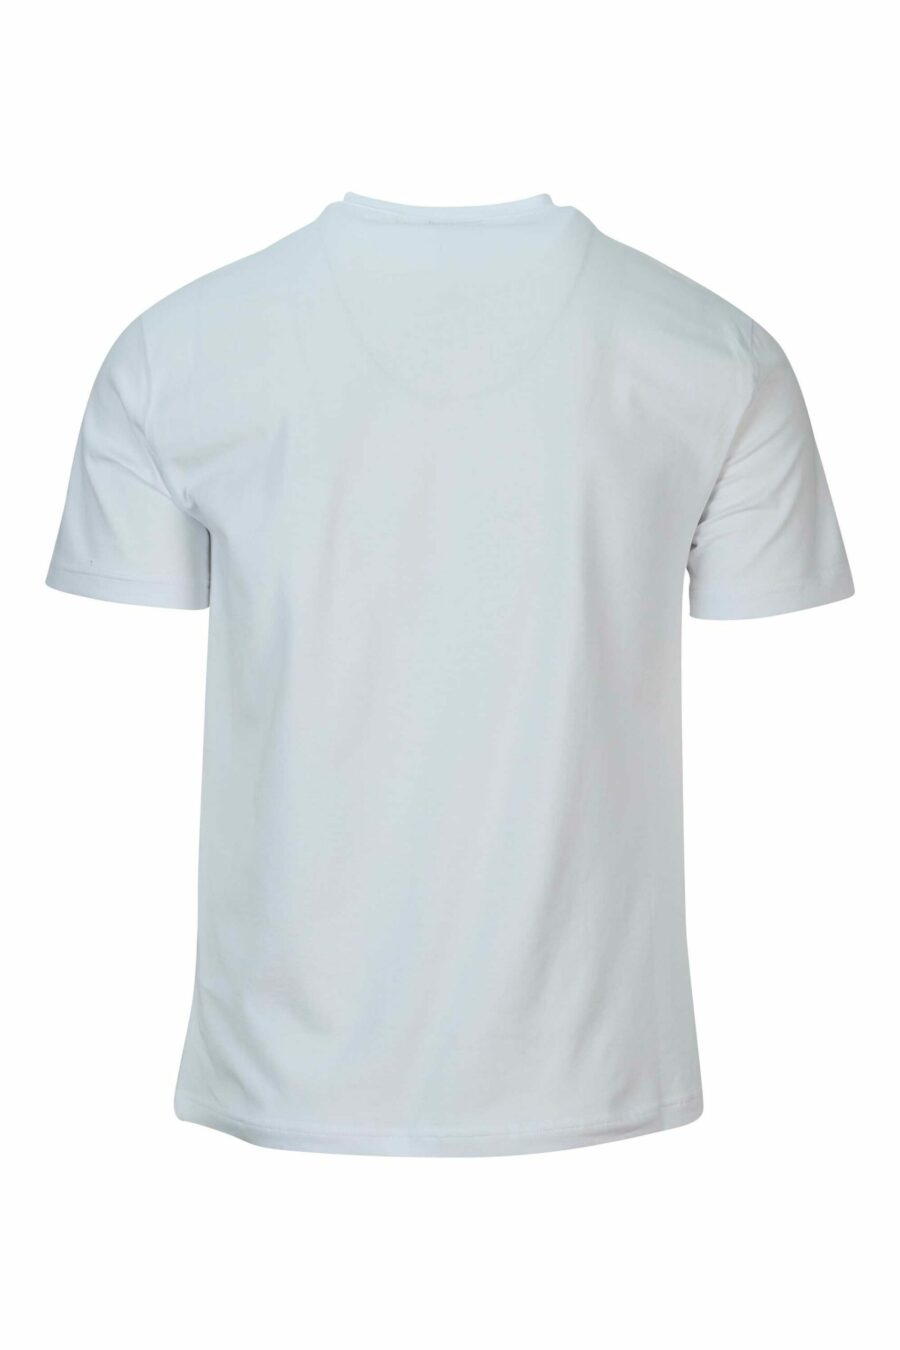 T-shirt blanc avec maxilogo "lux identity" argenté - 8057970672319 1 scaled